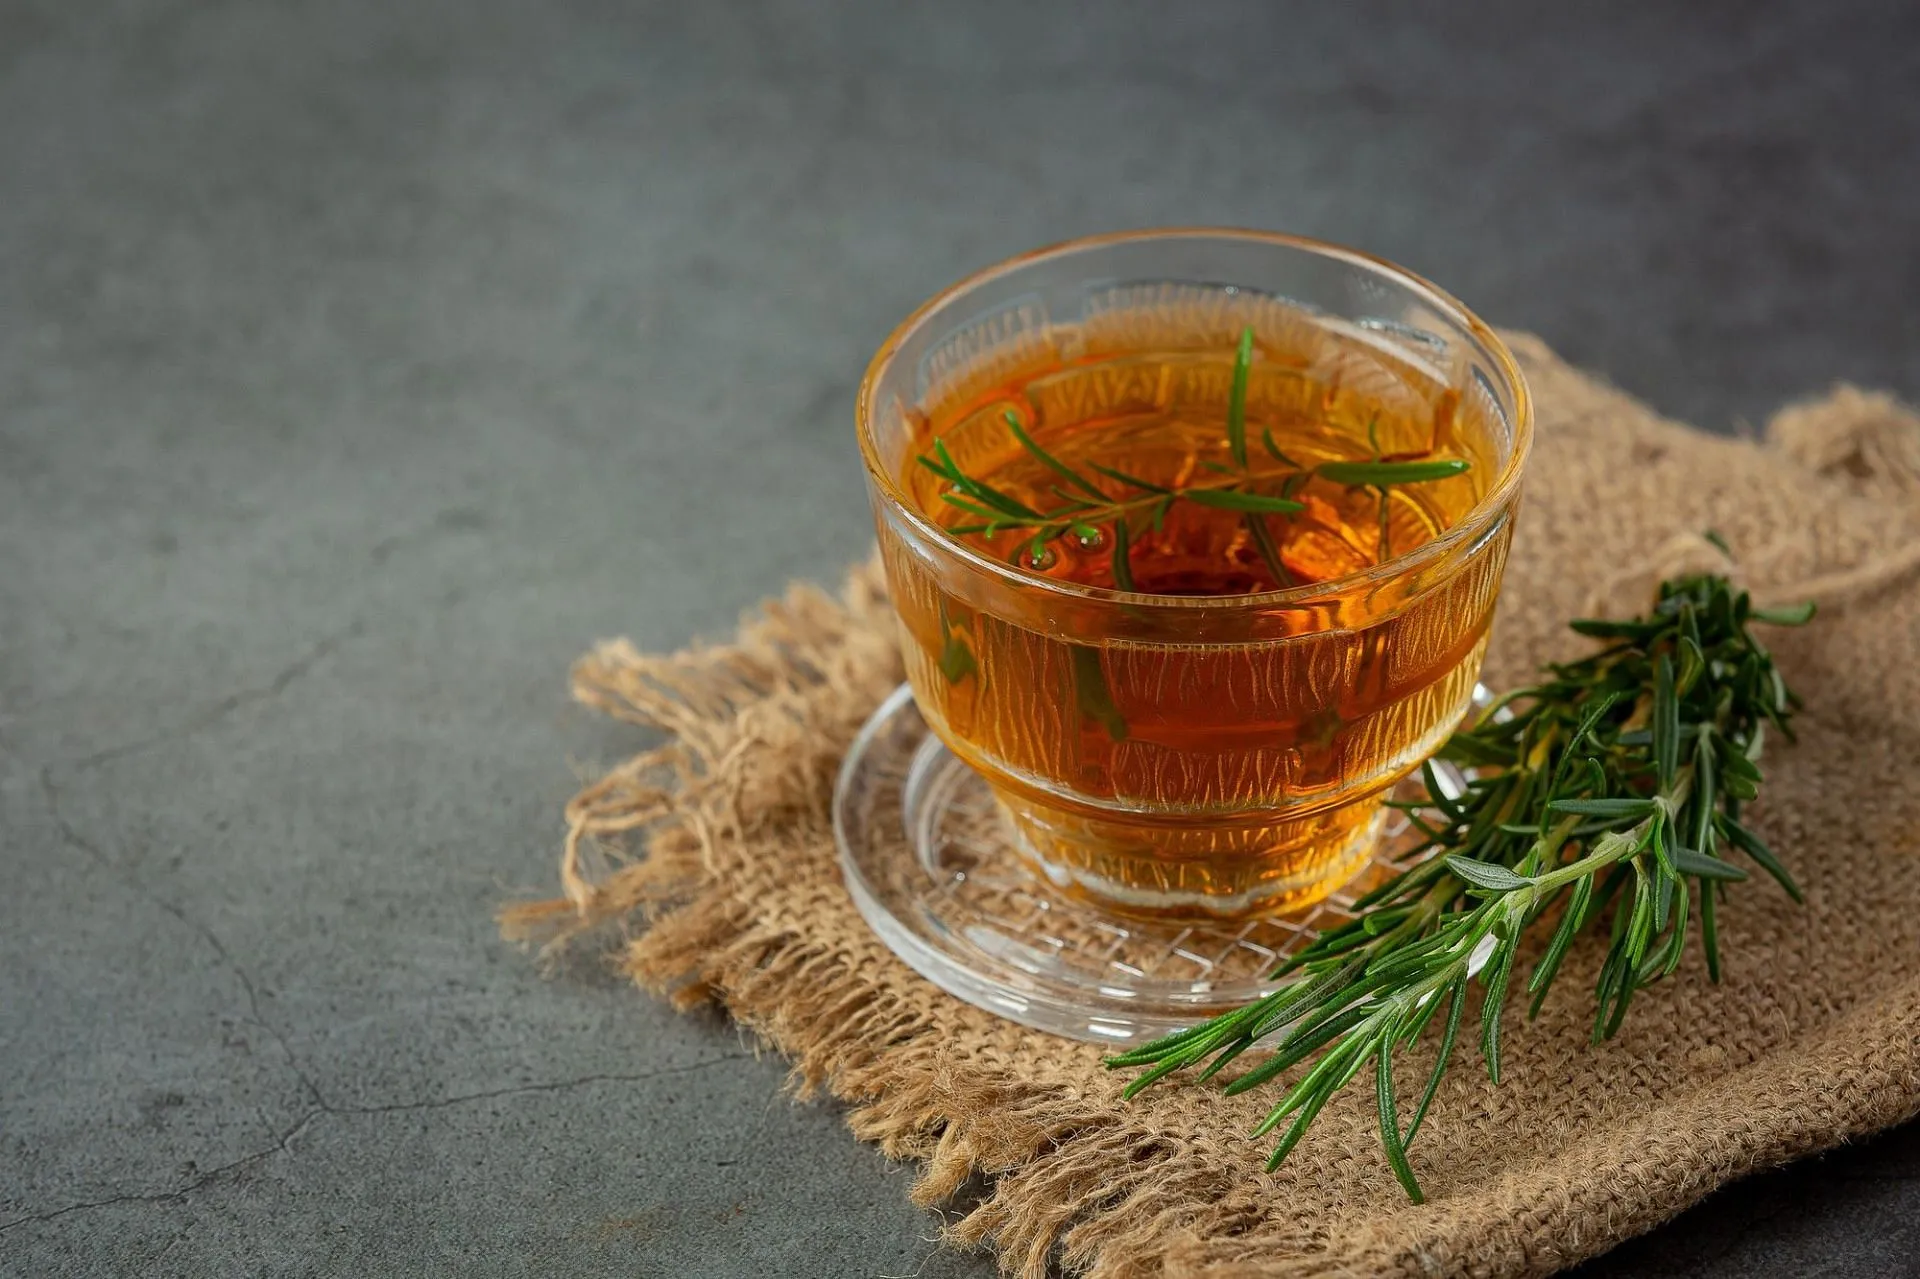 Make rosemary tea at home. (Image via Freepik/jcomp)